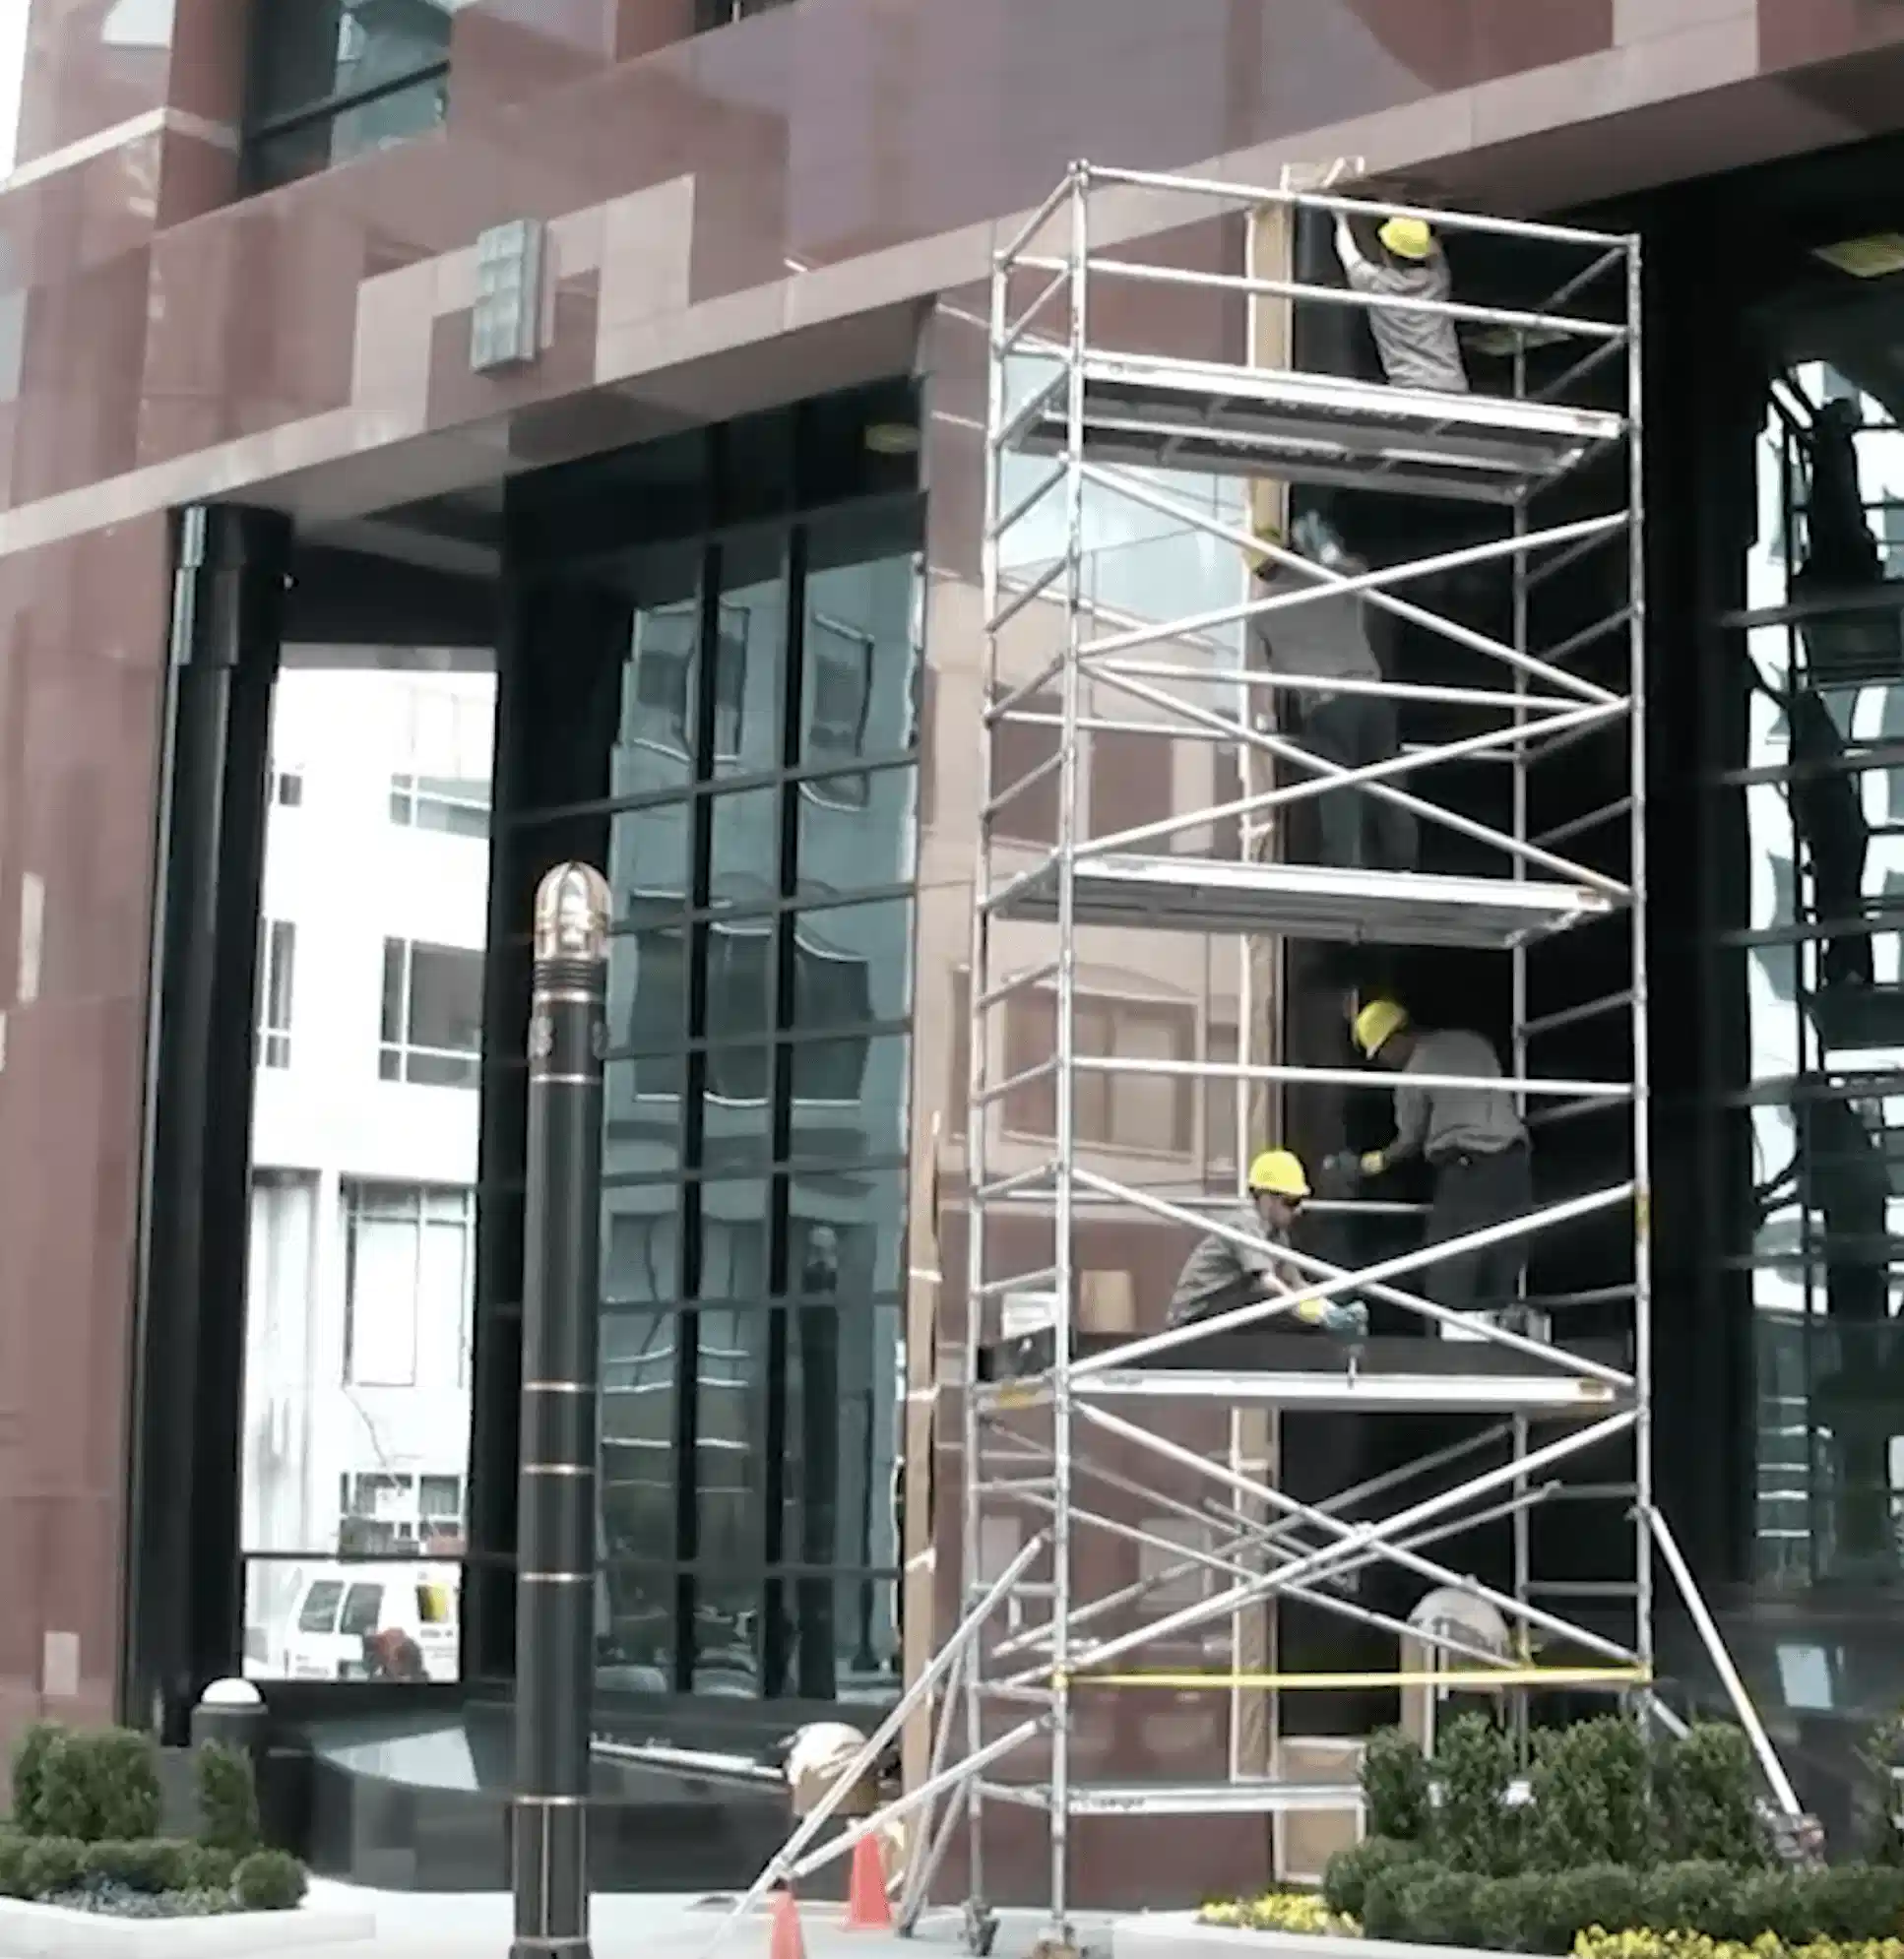 Technicians on scaffolding restoring a building facade